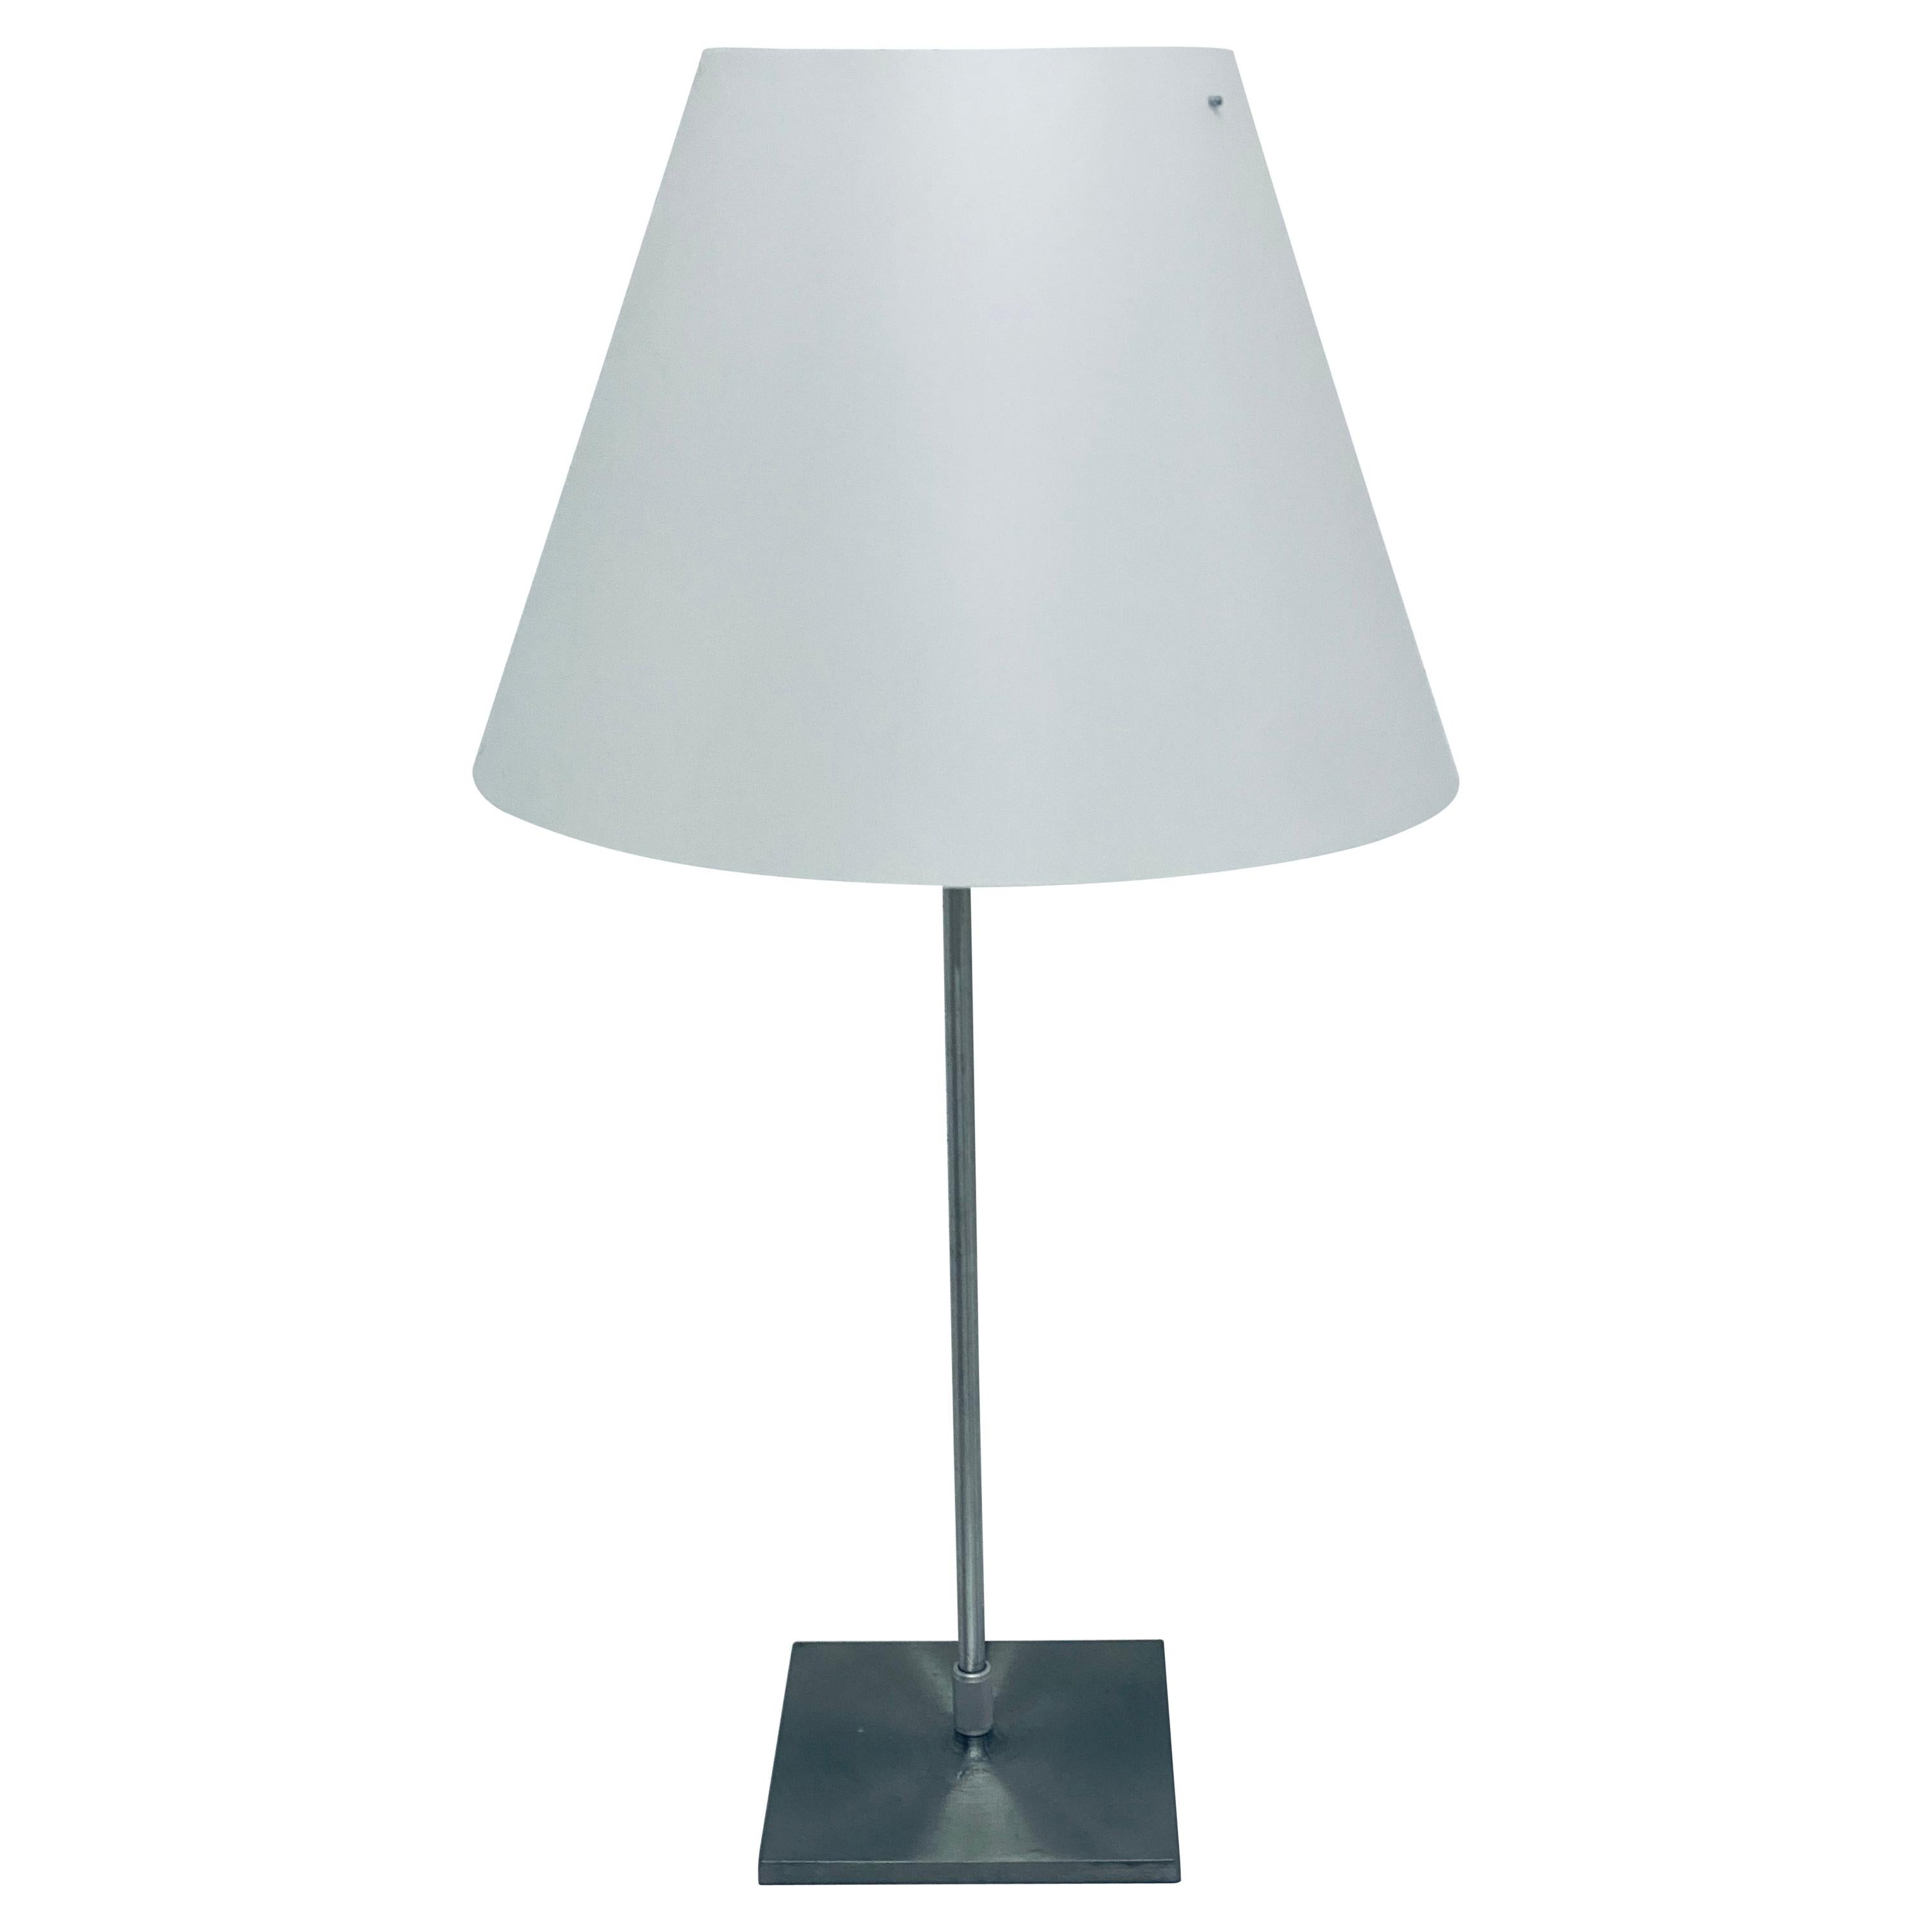 Paolo Rizzatto Costanza D13 Table or Desk Lamp for Luceplan